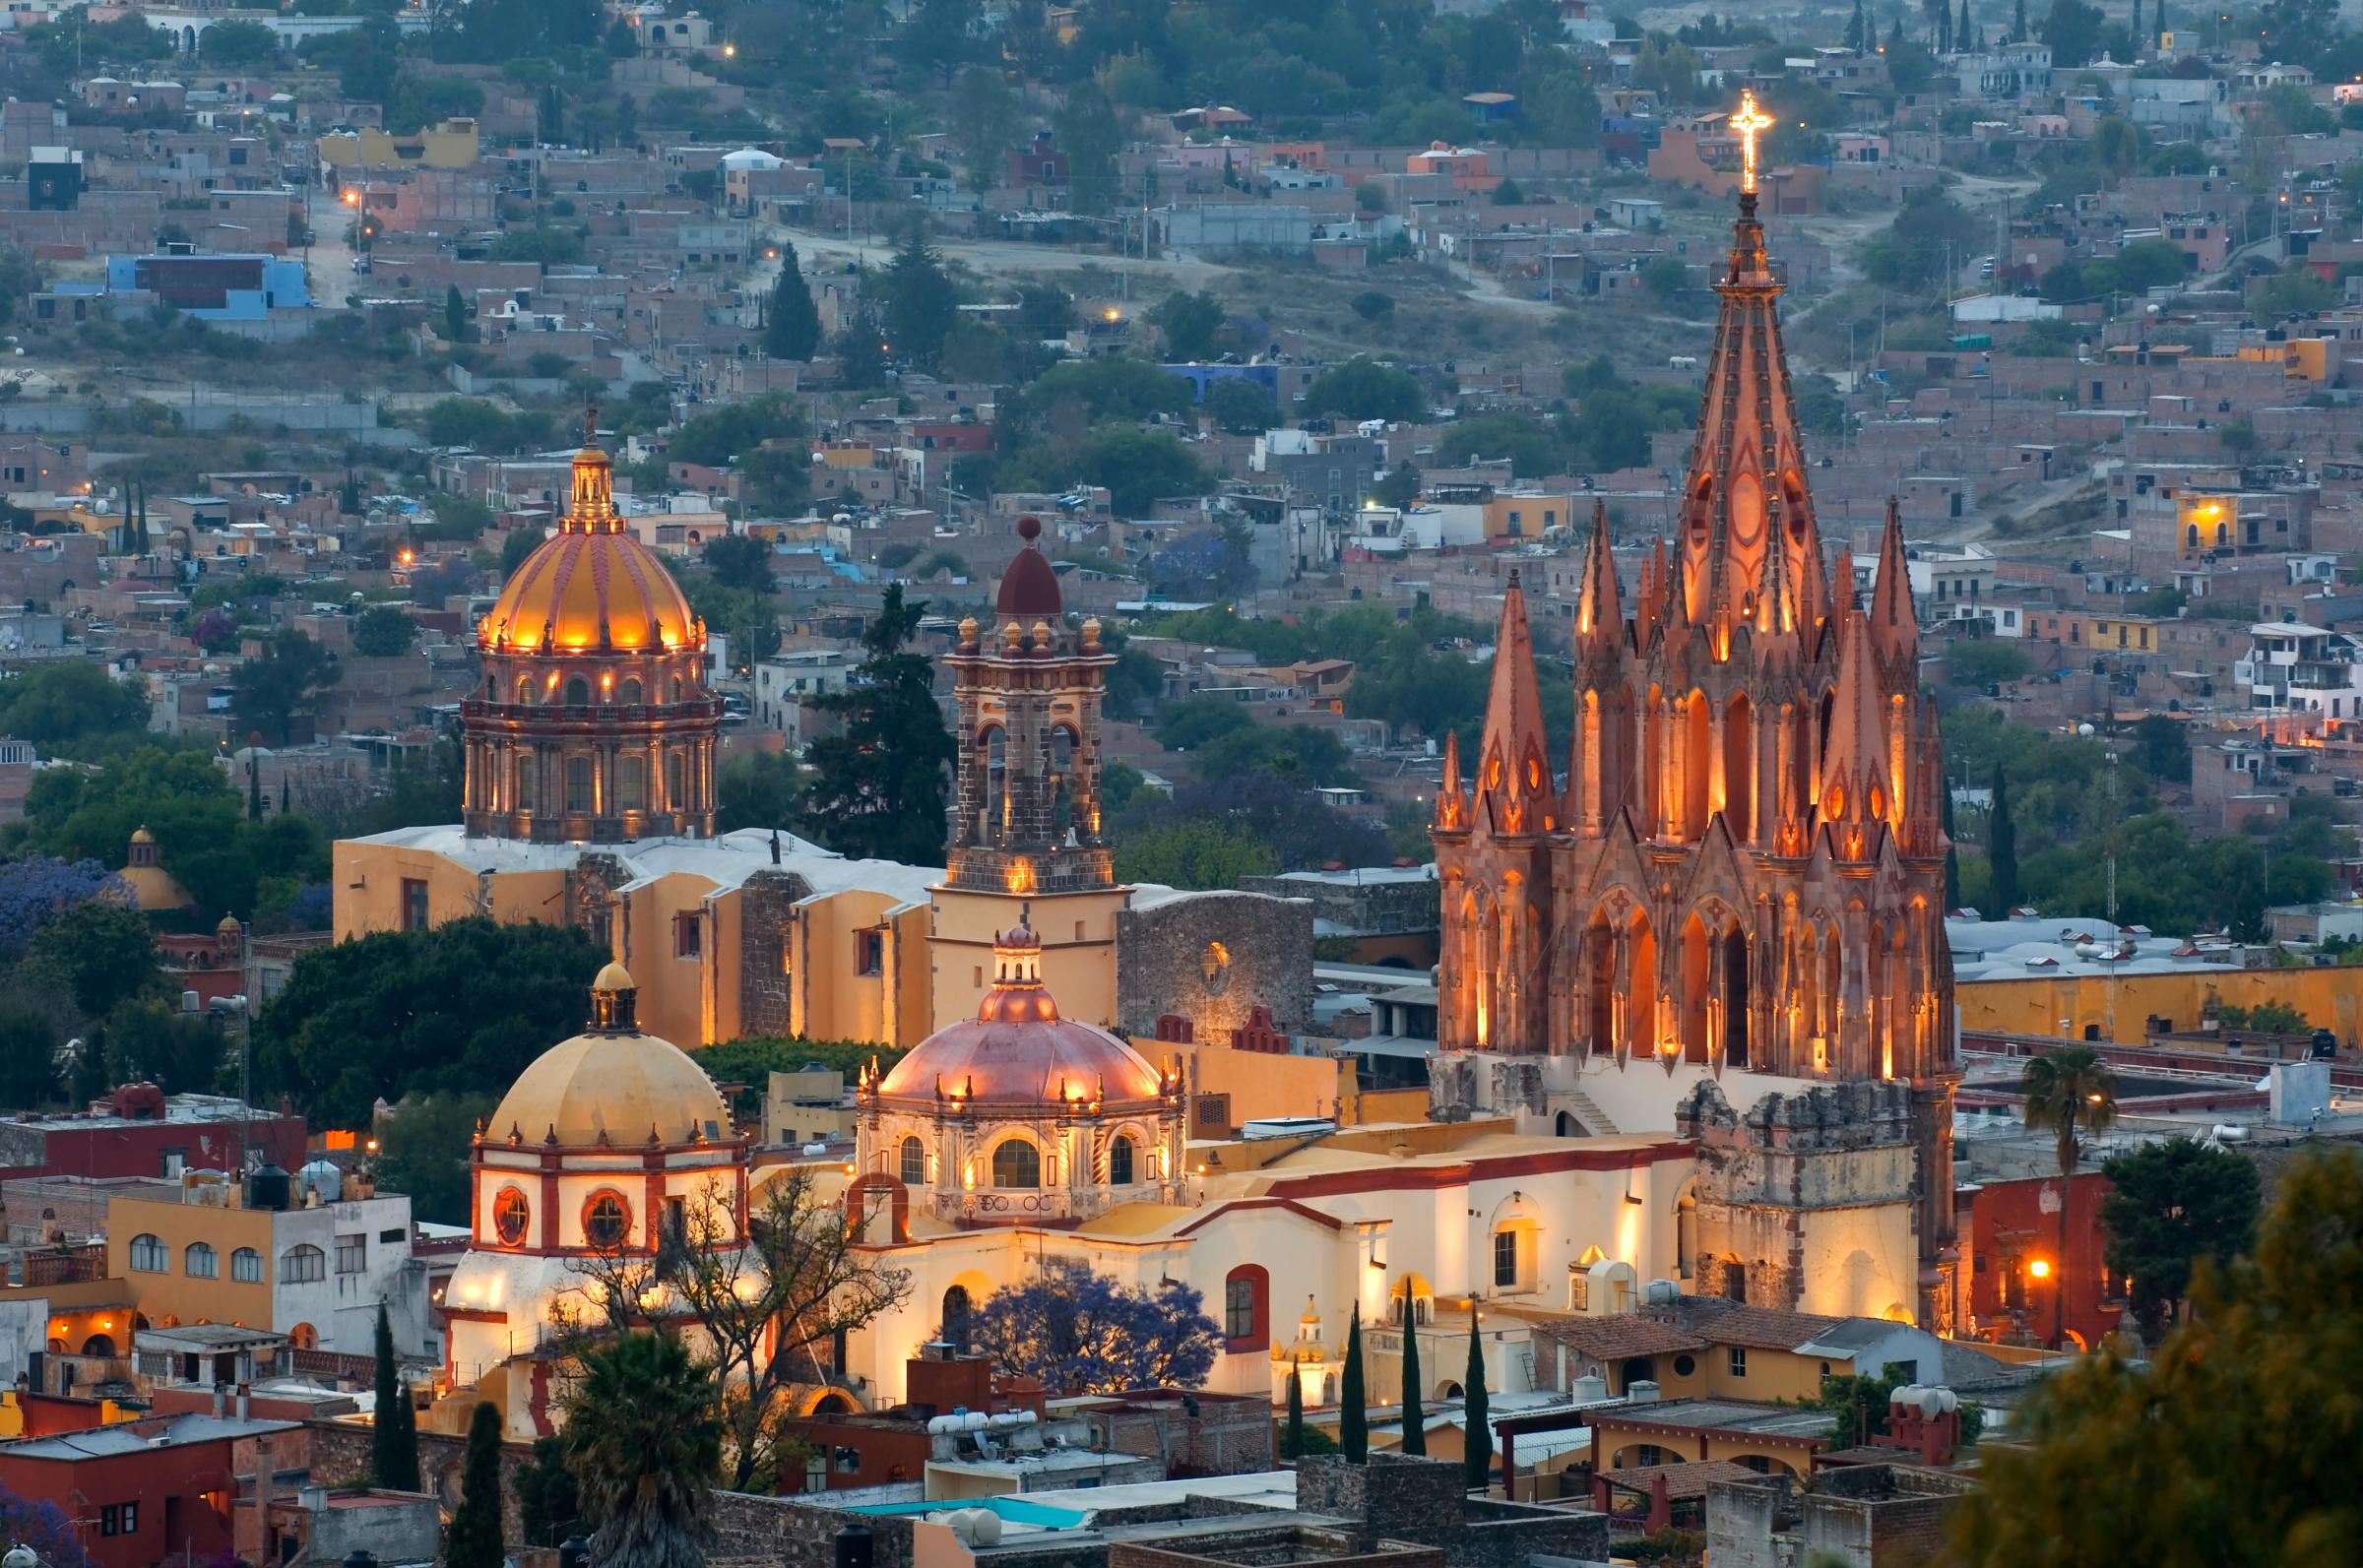 The Parroquia and Church of San Rafael, San Miguel de Allende, Mexico.